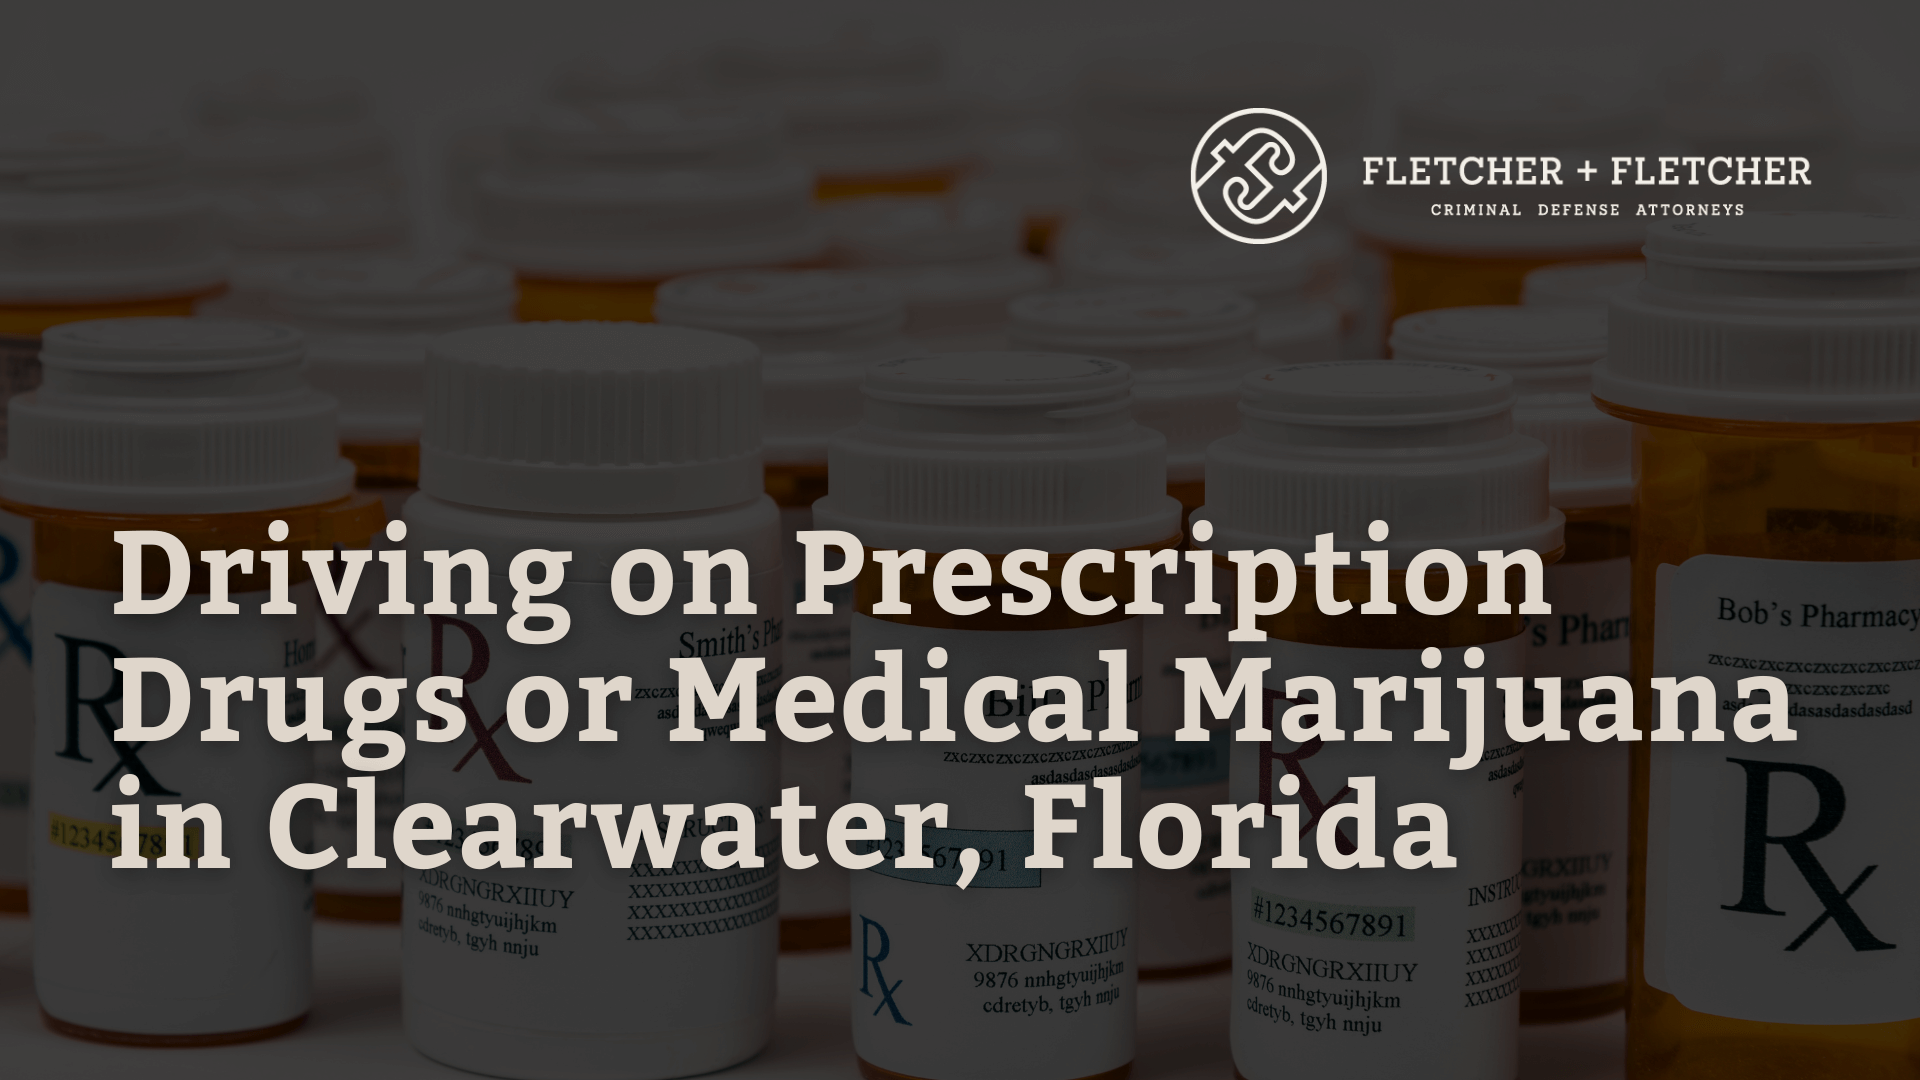 Driving on Prescription Drugs or Medical Marijuana in Clearwater, Florida - fletcher and fletcher - st pete florida criminal defense